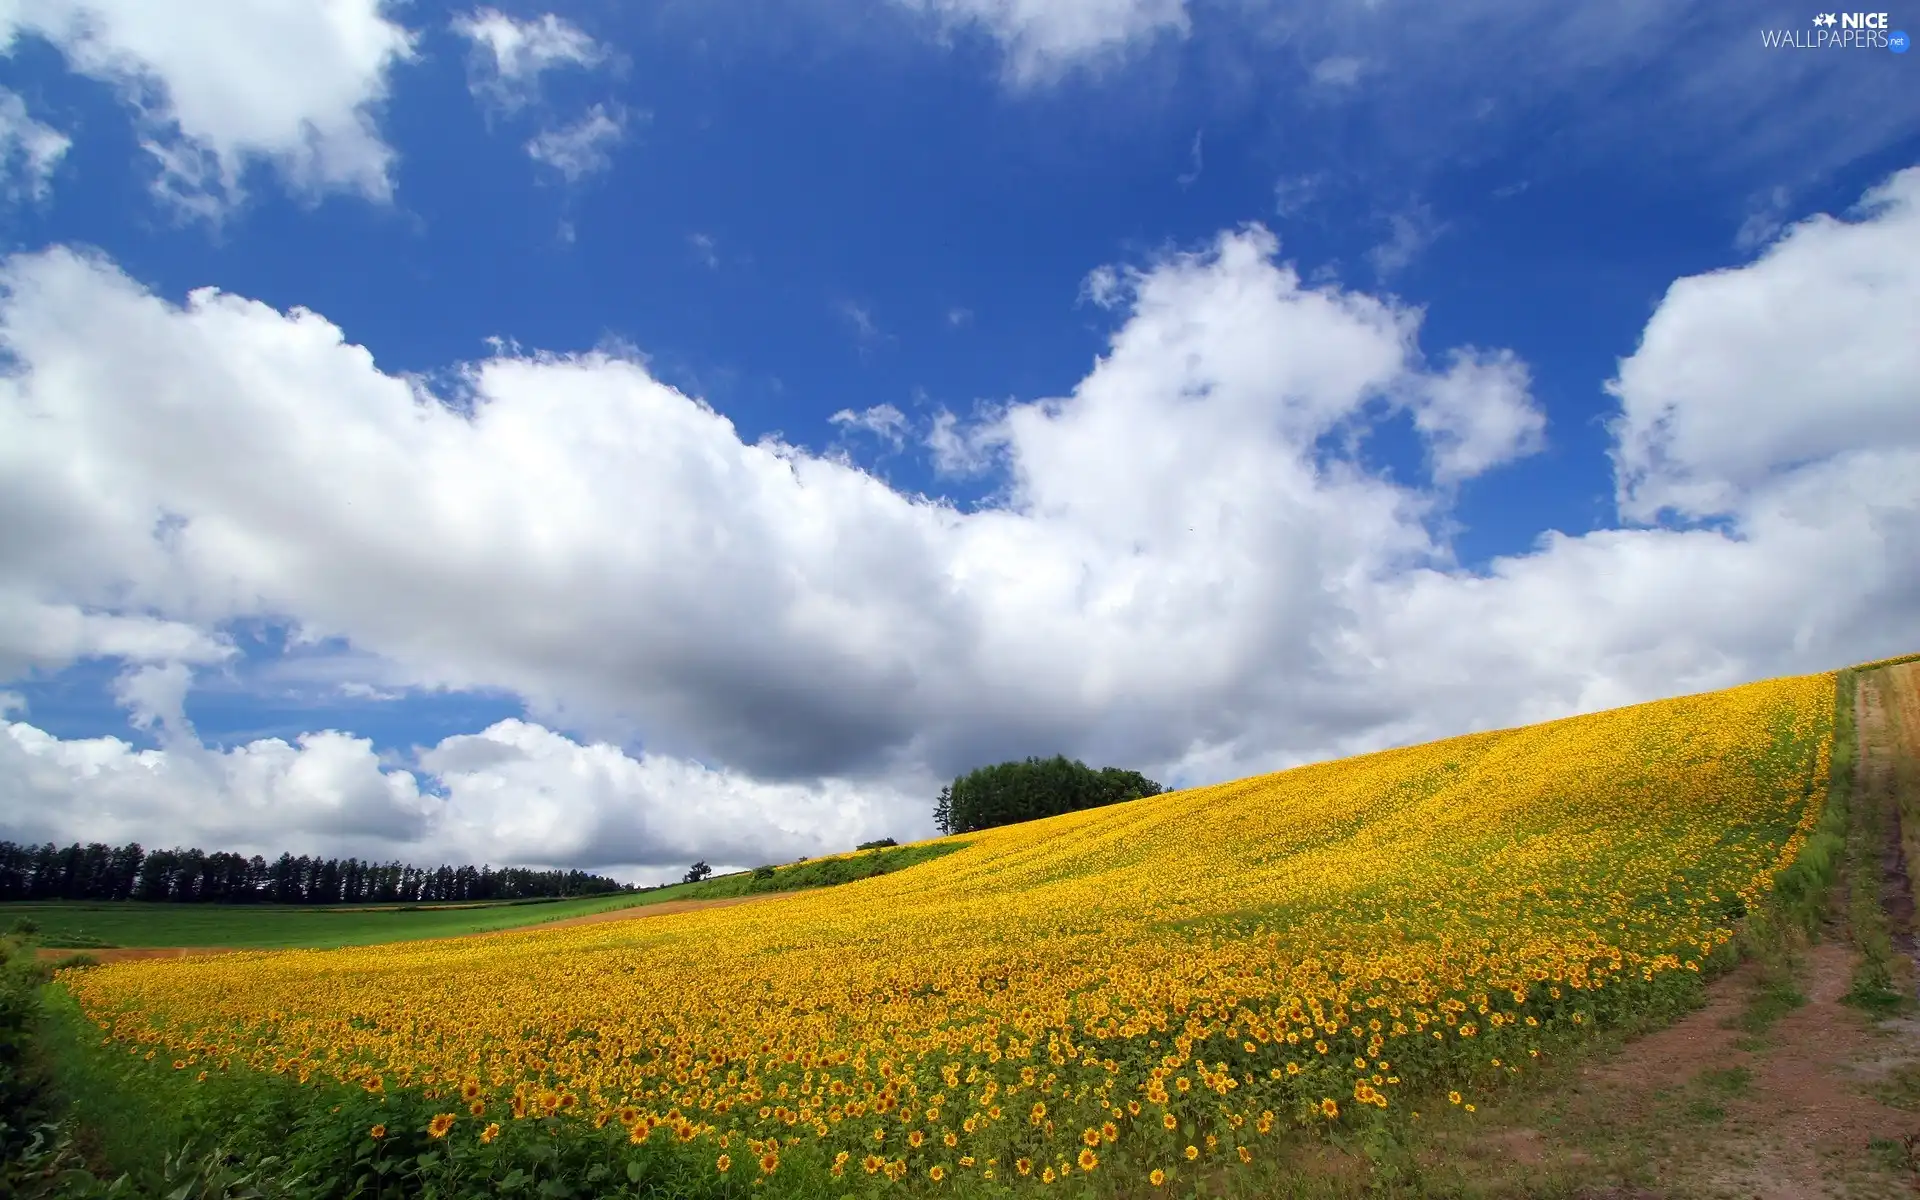 Field, Way, Sky, Nice sunflowers